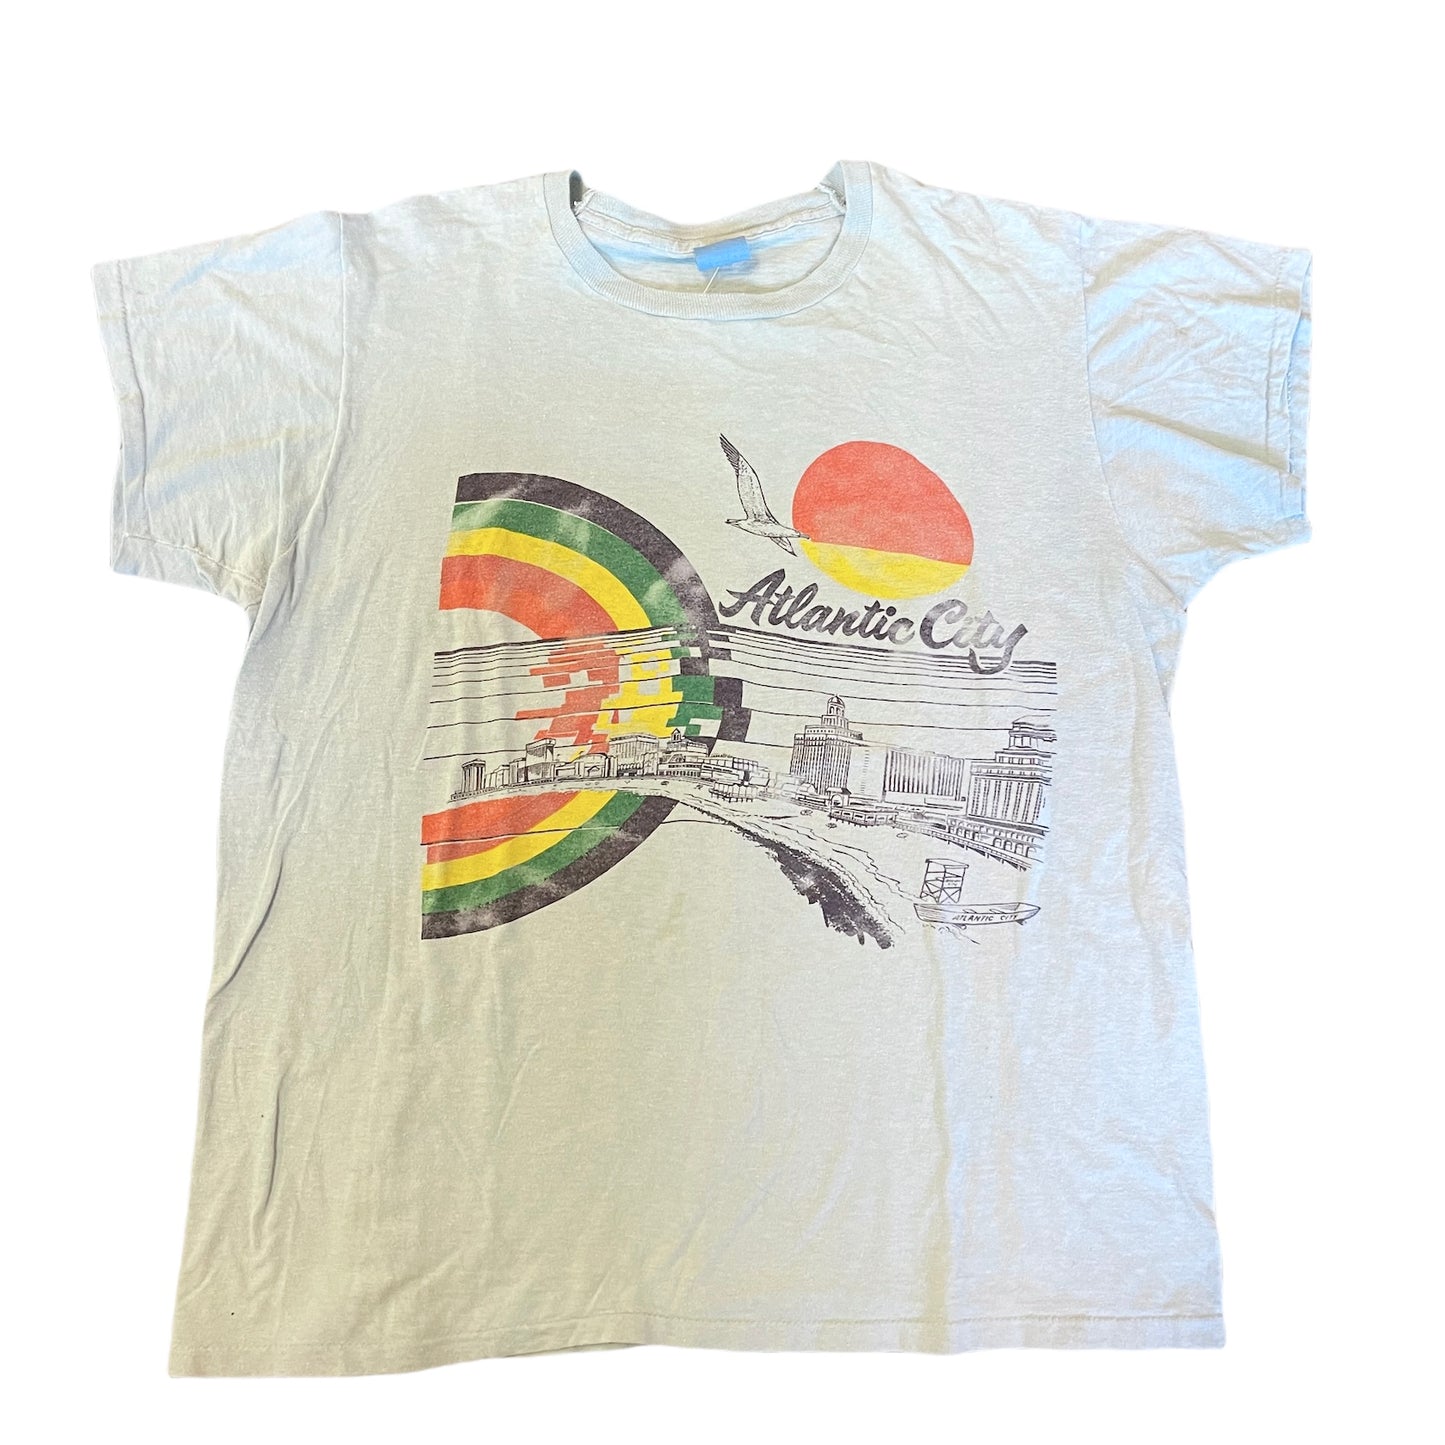 Vintage 1980s Atlantic City Boardwalk Graphic Shirt